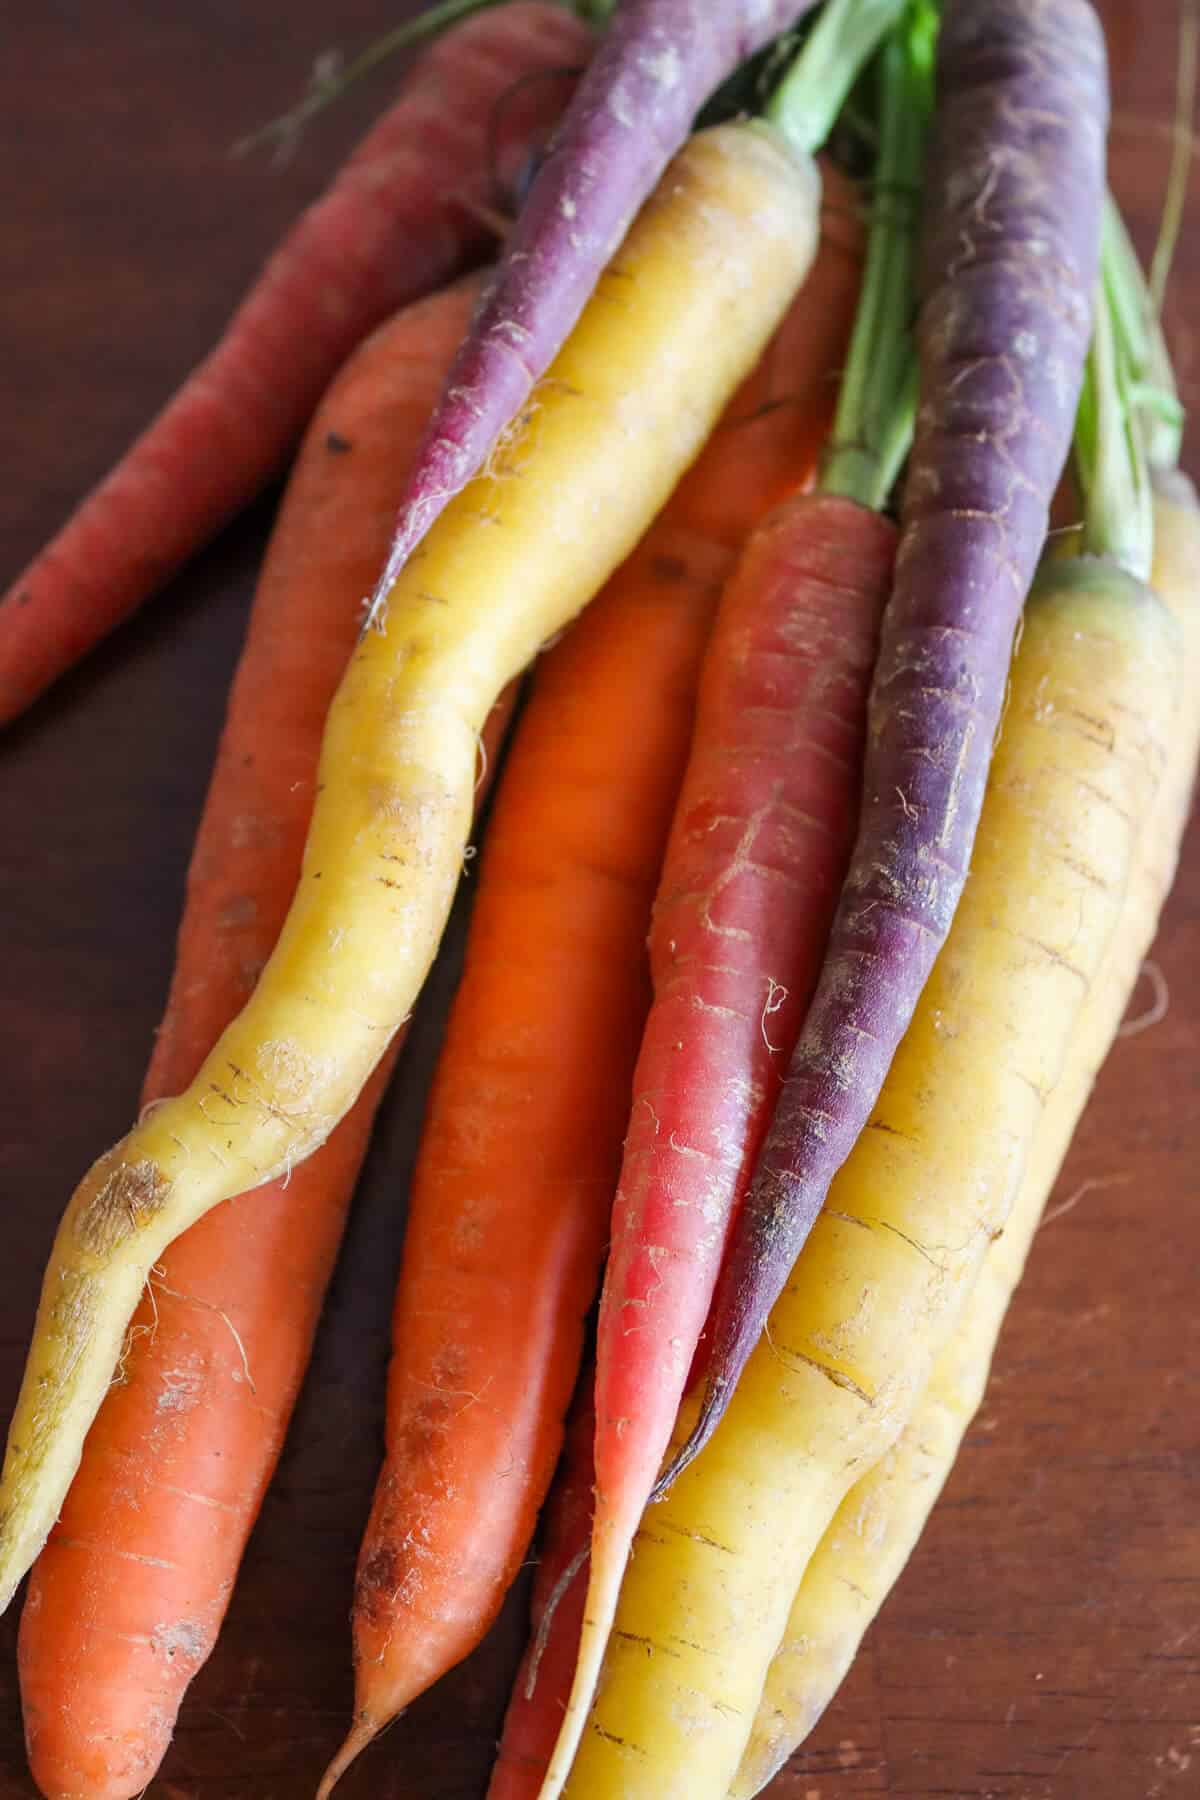 A bunch of rainbow carrots.